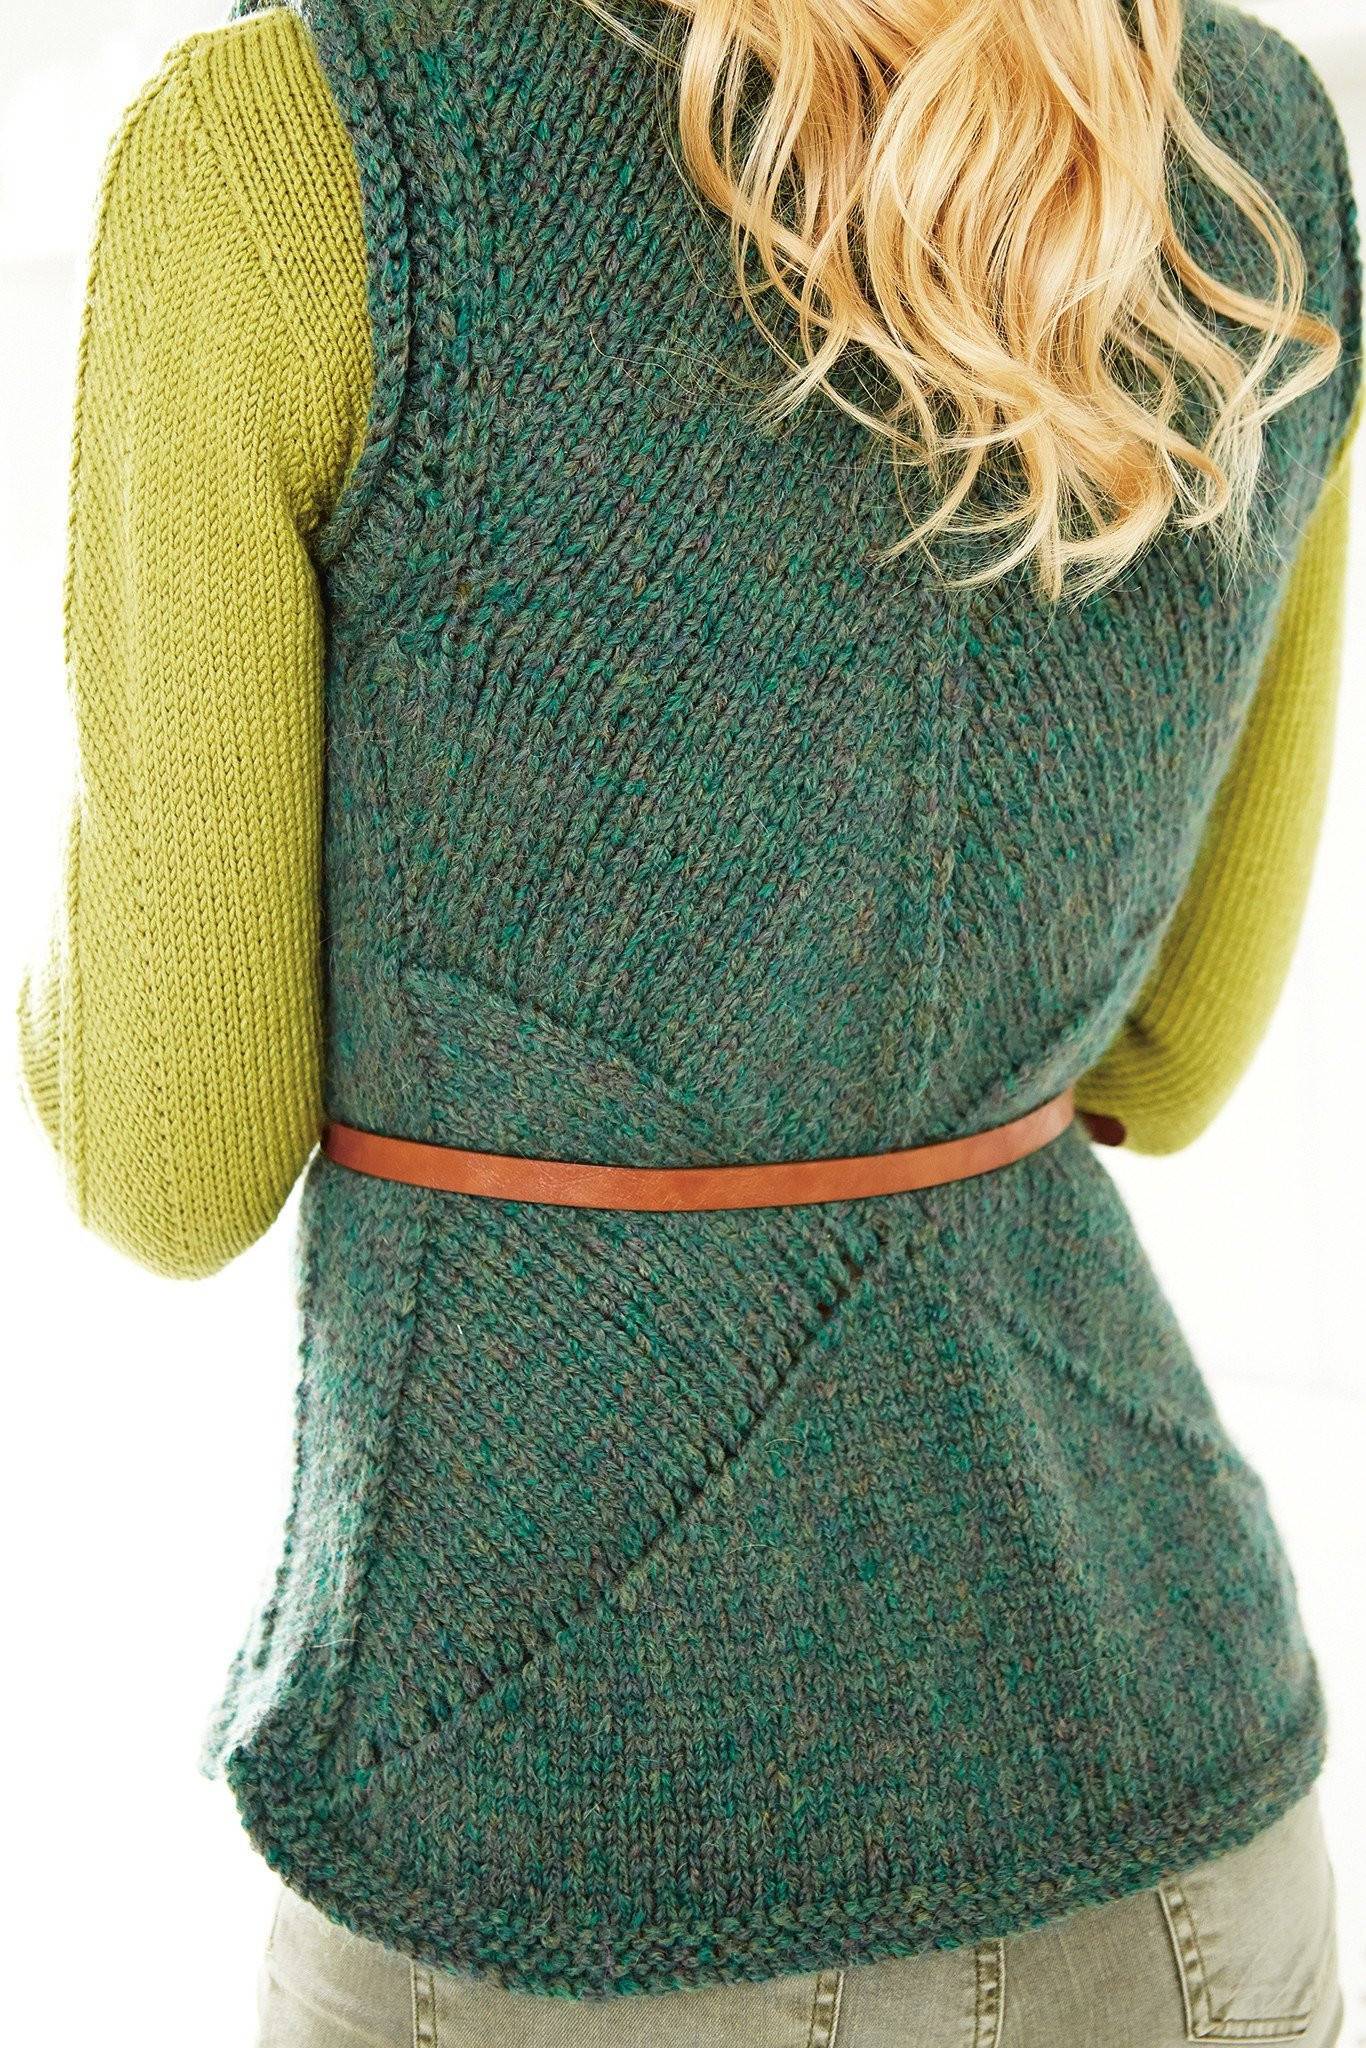 Chevron Womens Gilet Knitting Pattern | The Knitting Network